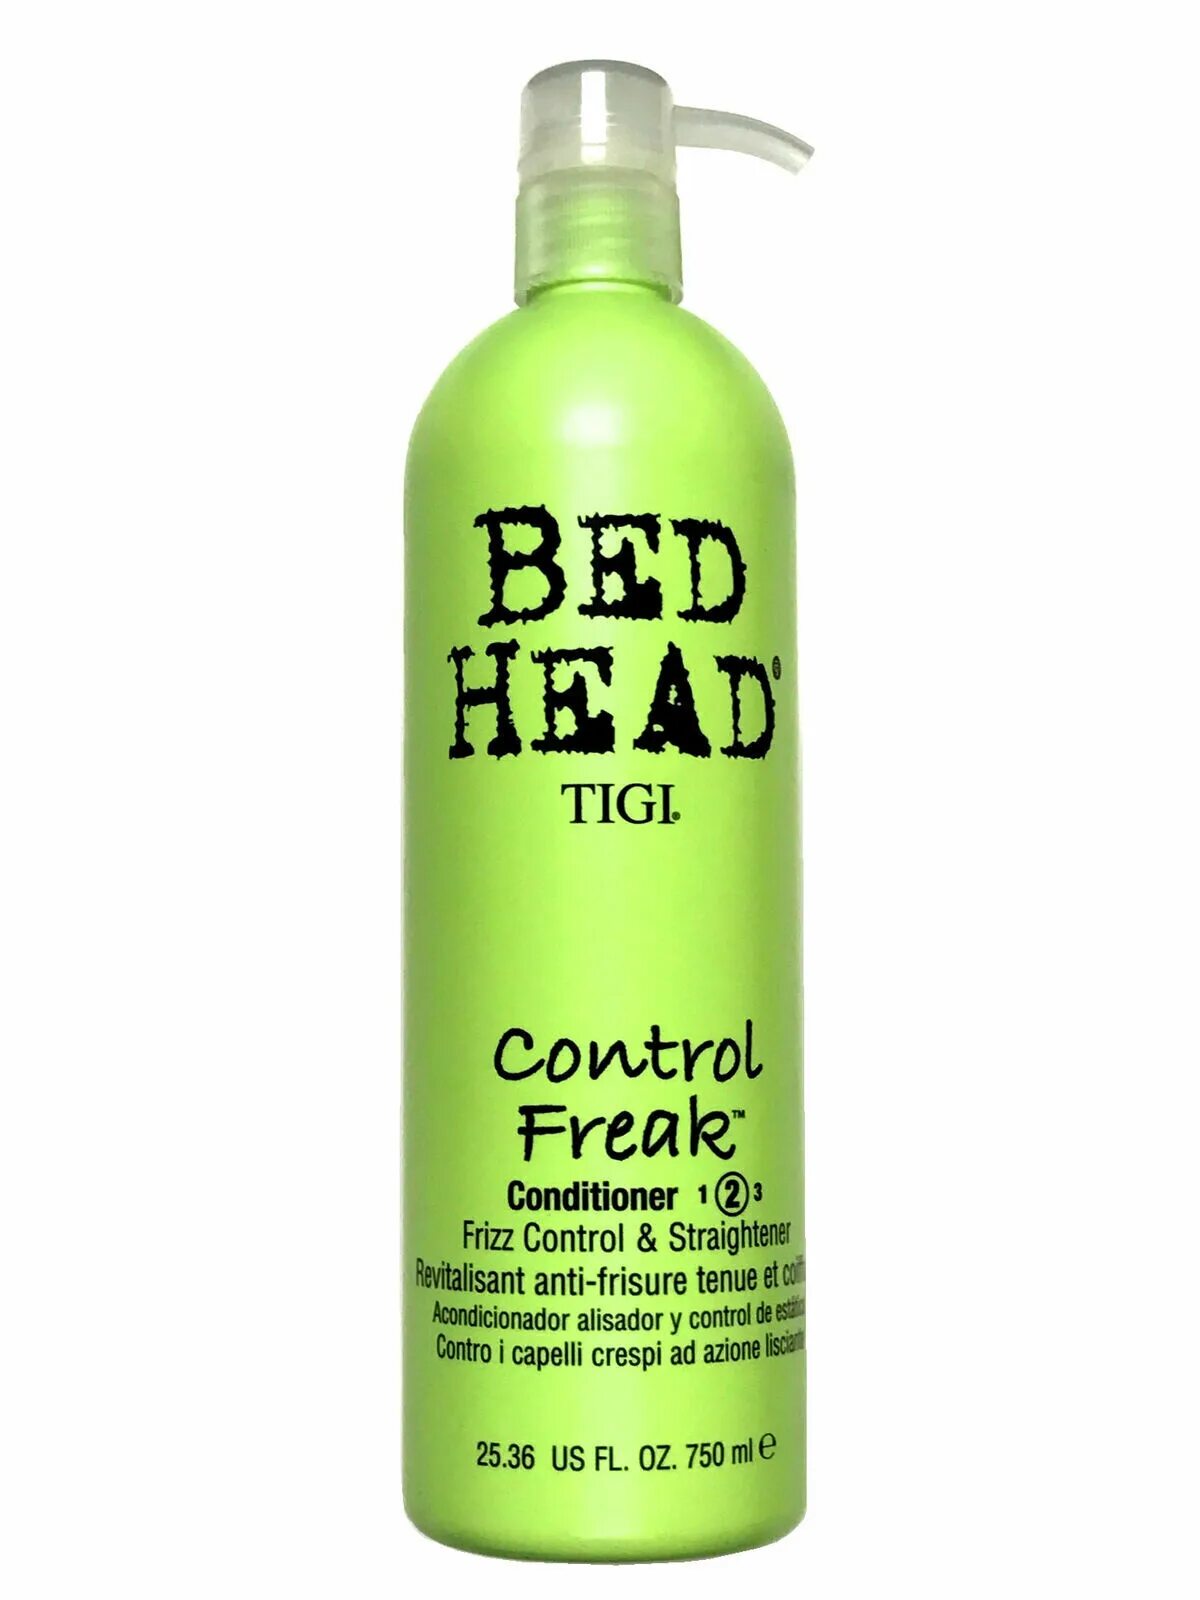 Bed head Tigi для волос Control Freak. Tigi Bed head Control Freak Conditioner. Bed head Tigi контроль. Тиджи Control Freak. Tigi control